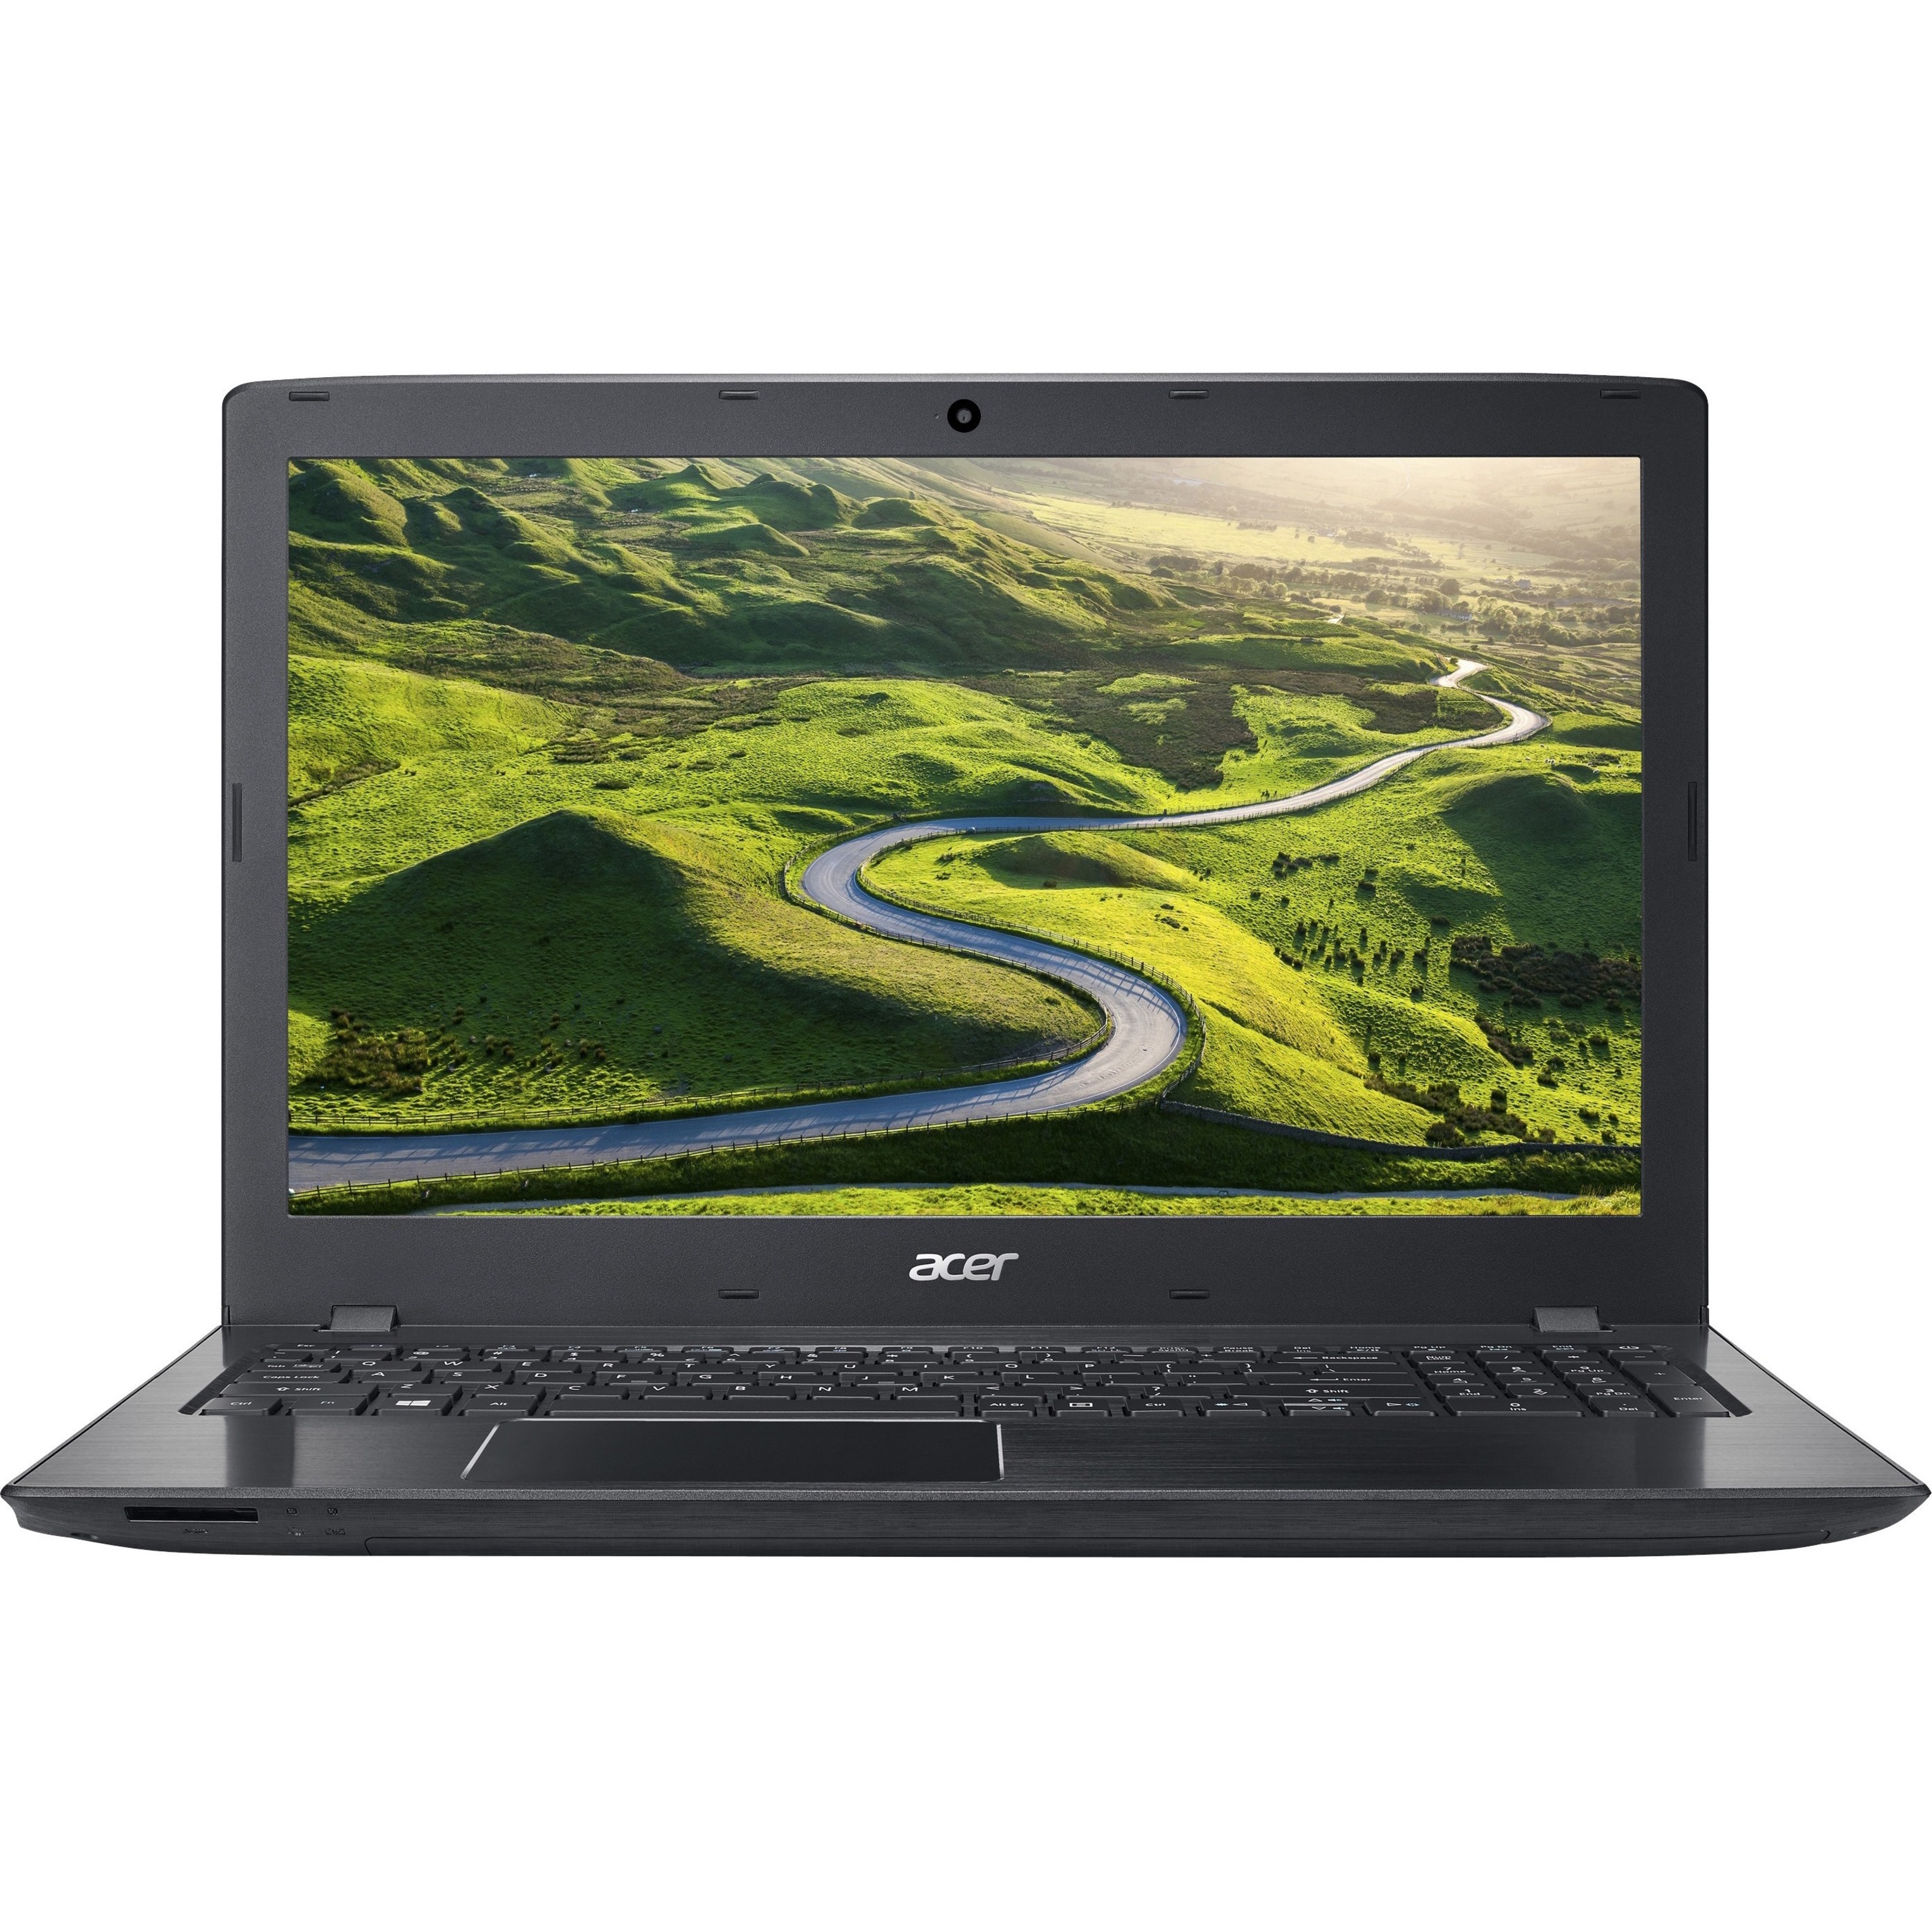 Acer Aspire 15.6" Full HD Laptop, Intel Core i5 i5-7200U, 256GB SSD, DVD Writer, Windows 10 Home, E5-575G-57D4 - image 3 of 6